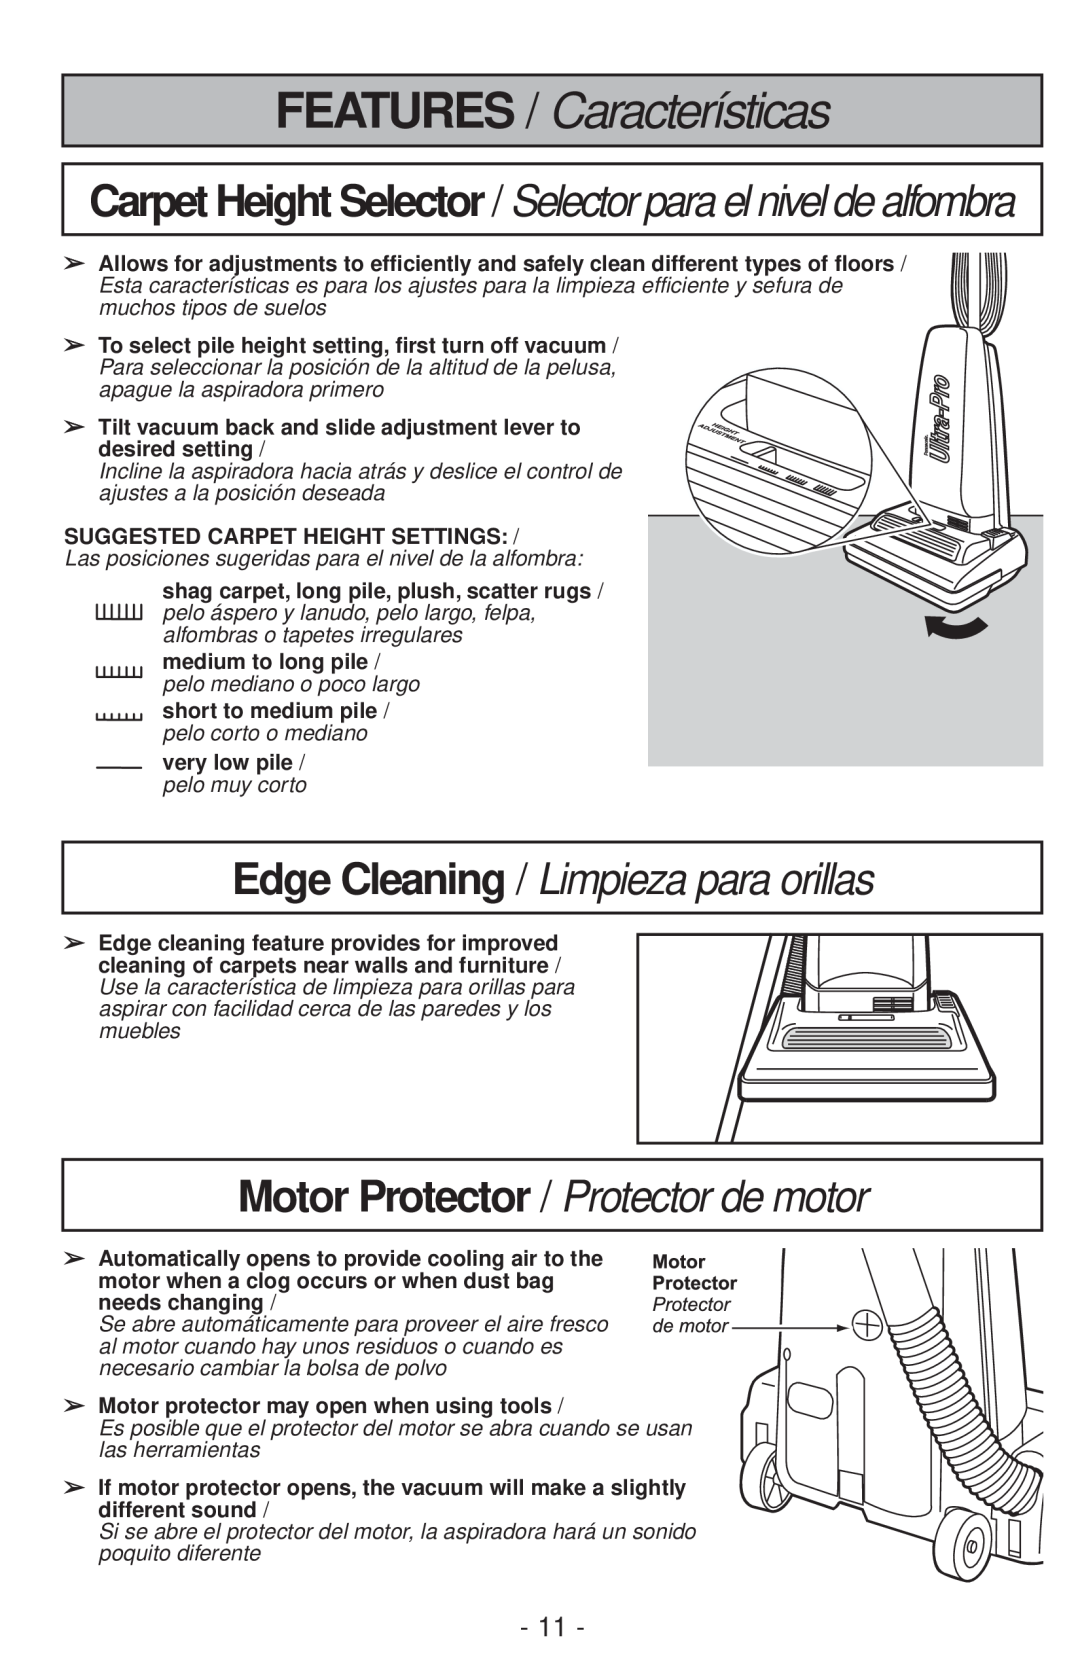 Panasonic MC-V200 FEATURES / Características, Edge Cleaning / Limpieza para orillas, Motor Protector / Protector de motor 